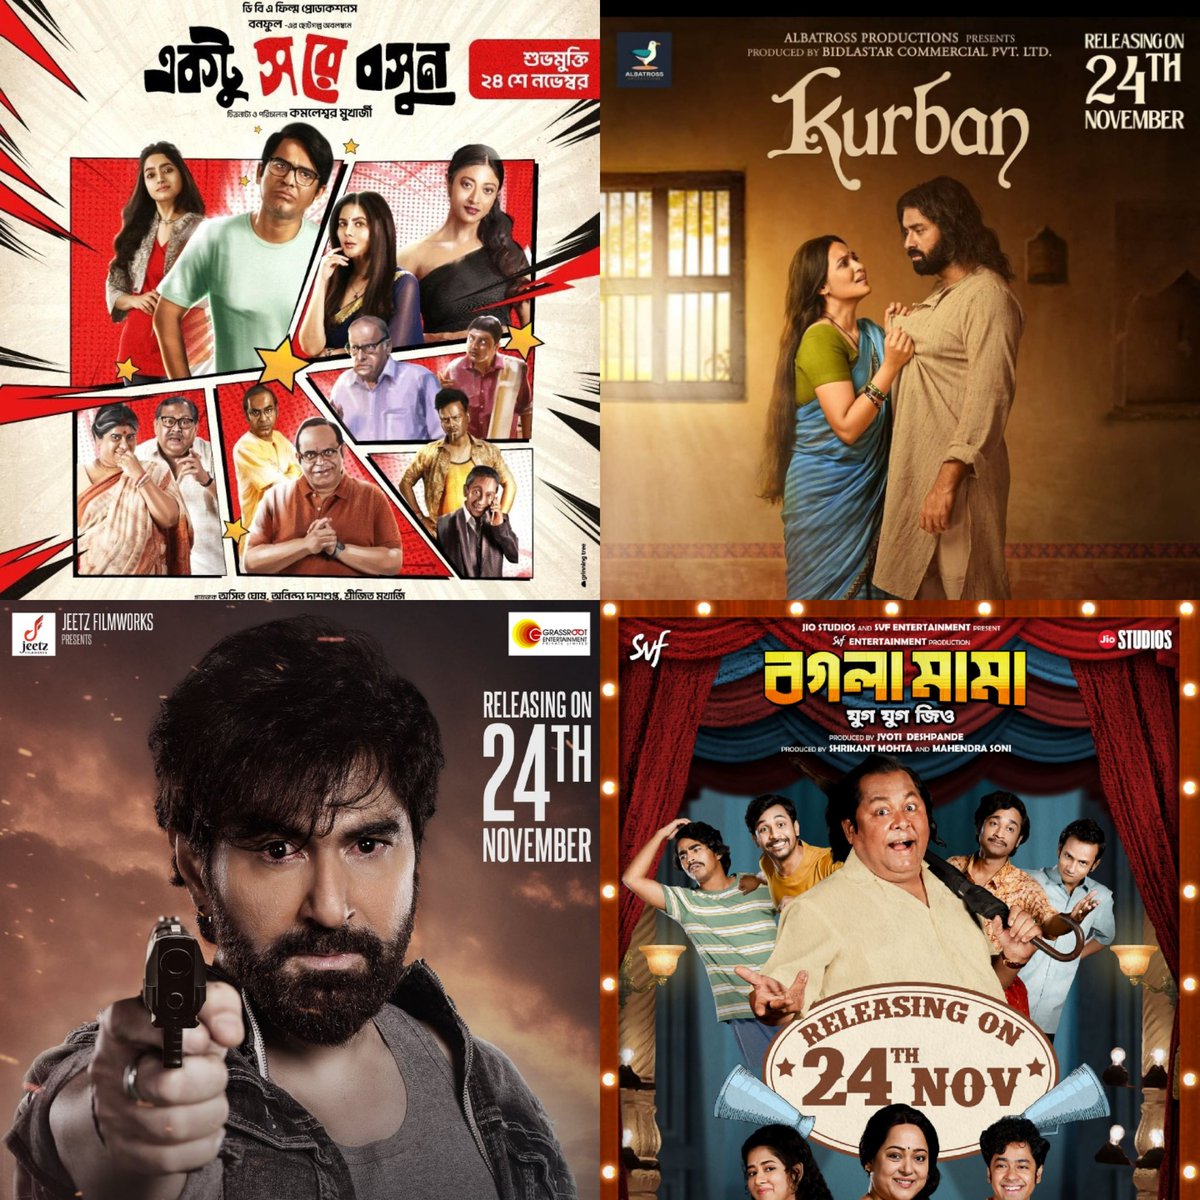 Four bengali films are releasing on 24th Nov ; for which one are you interested the most ?

#EktuSoreBosun #Kurban #Manush #BoglaMama
#ReleasingOn24thNov
#BanglaCinema